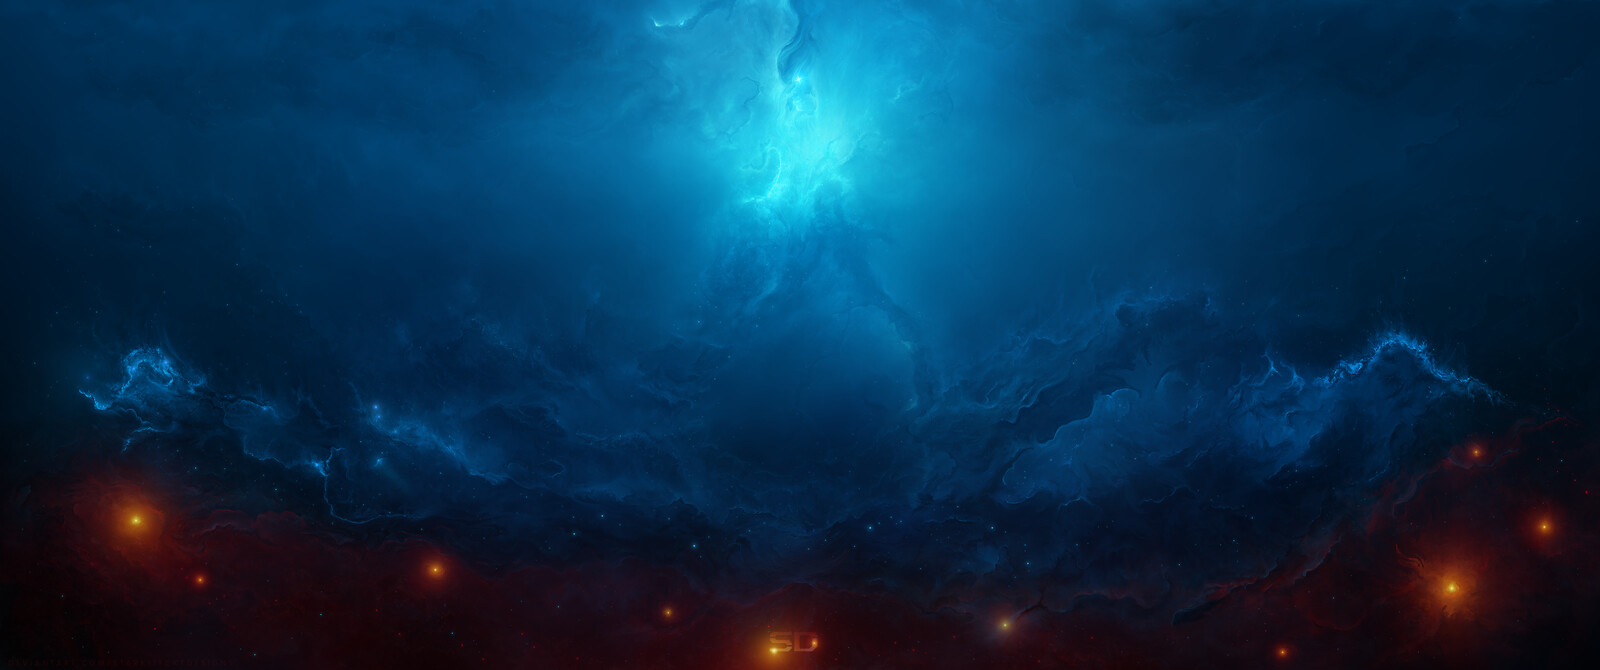 Arch Nebula